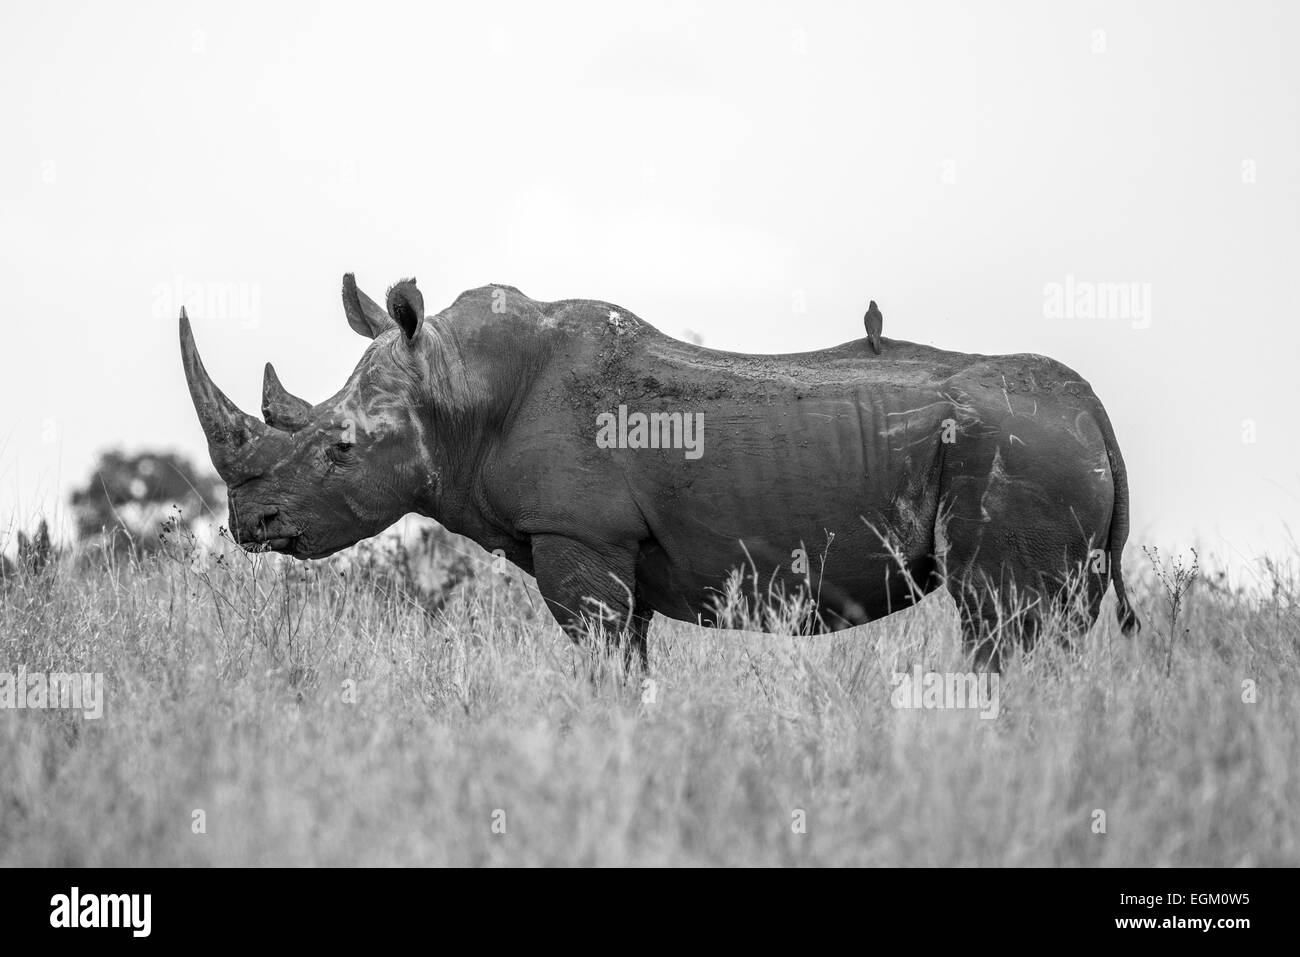 A beautiful White Rhino showing us a wonderful side profile. Majestic Creatures... Stock Photo